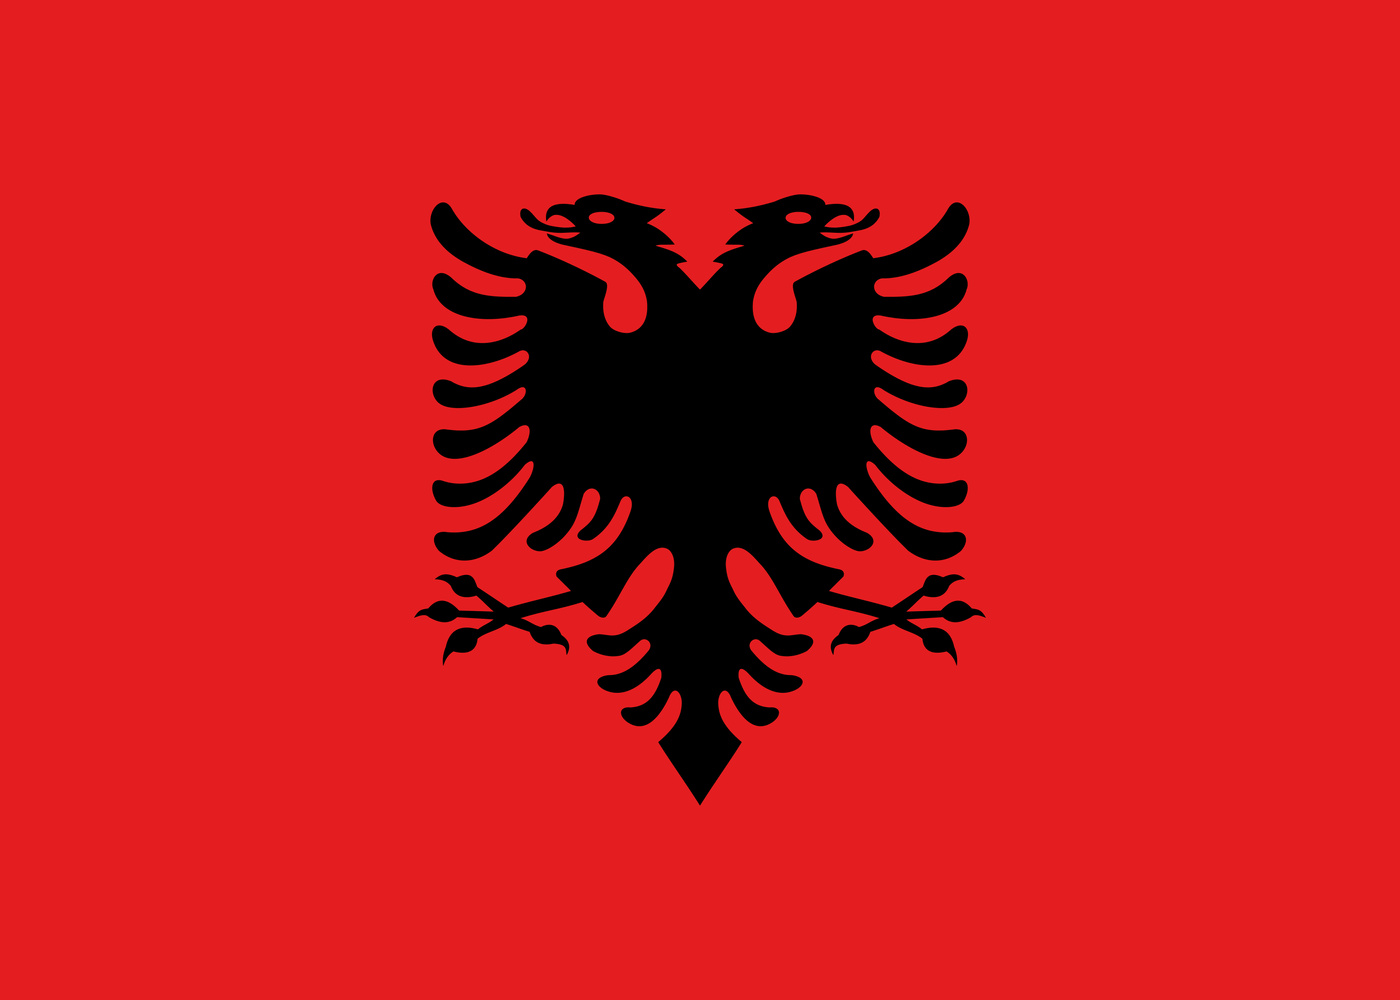 the flag of albania